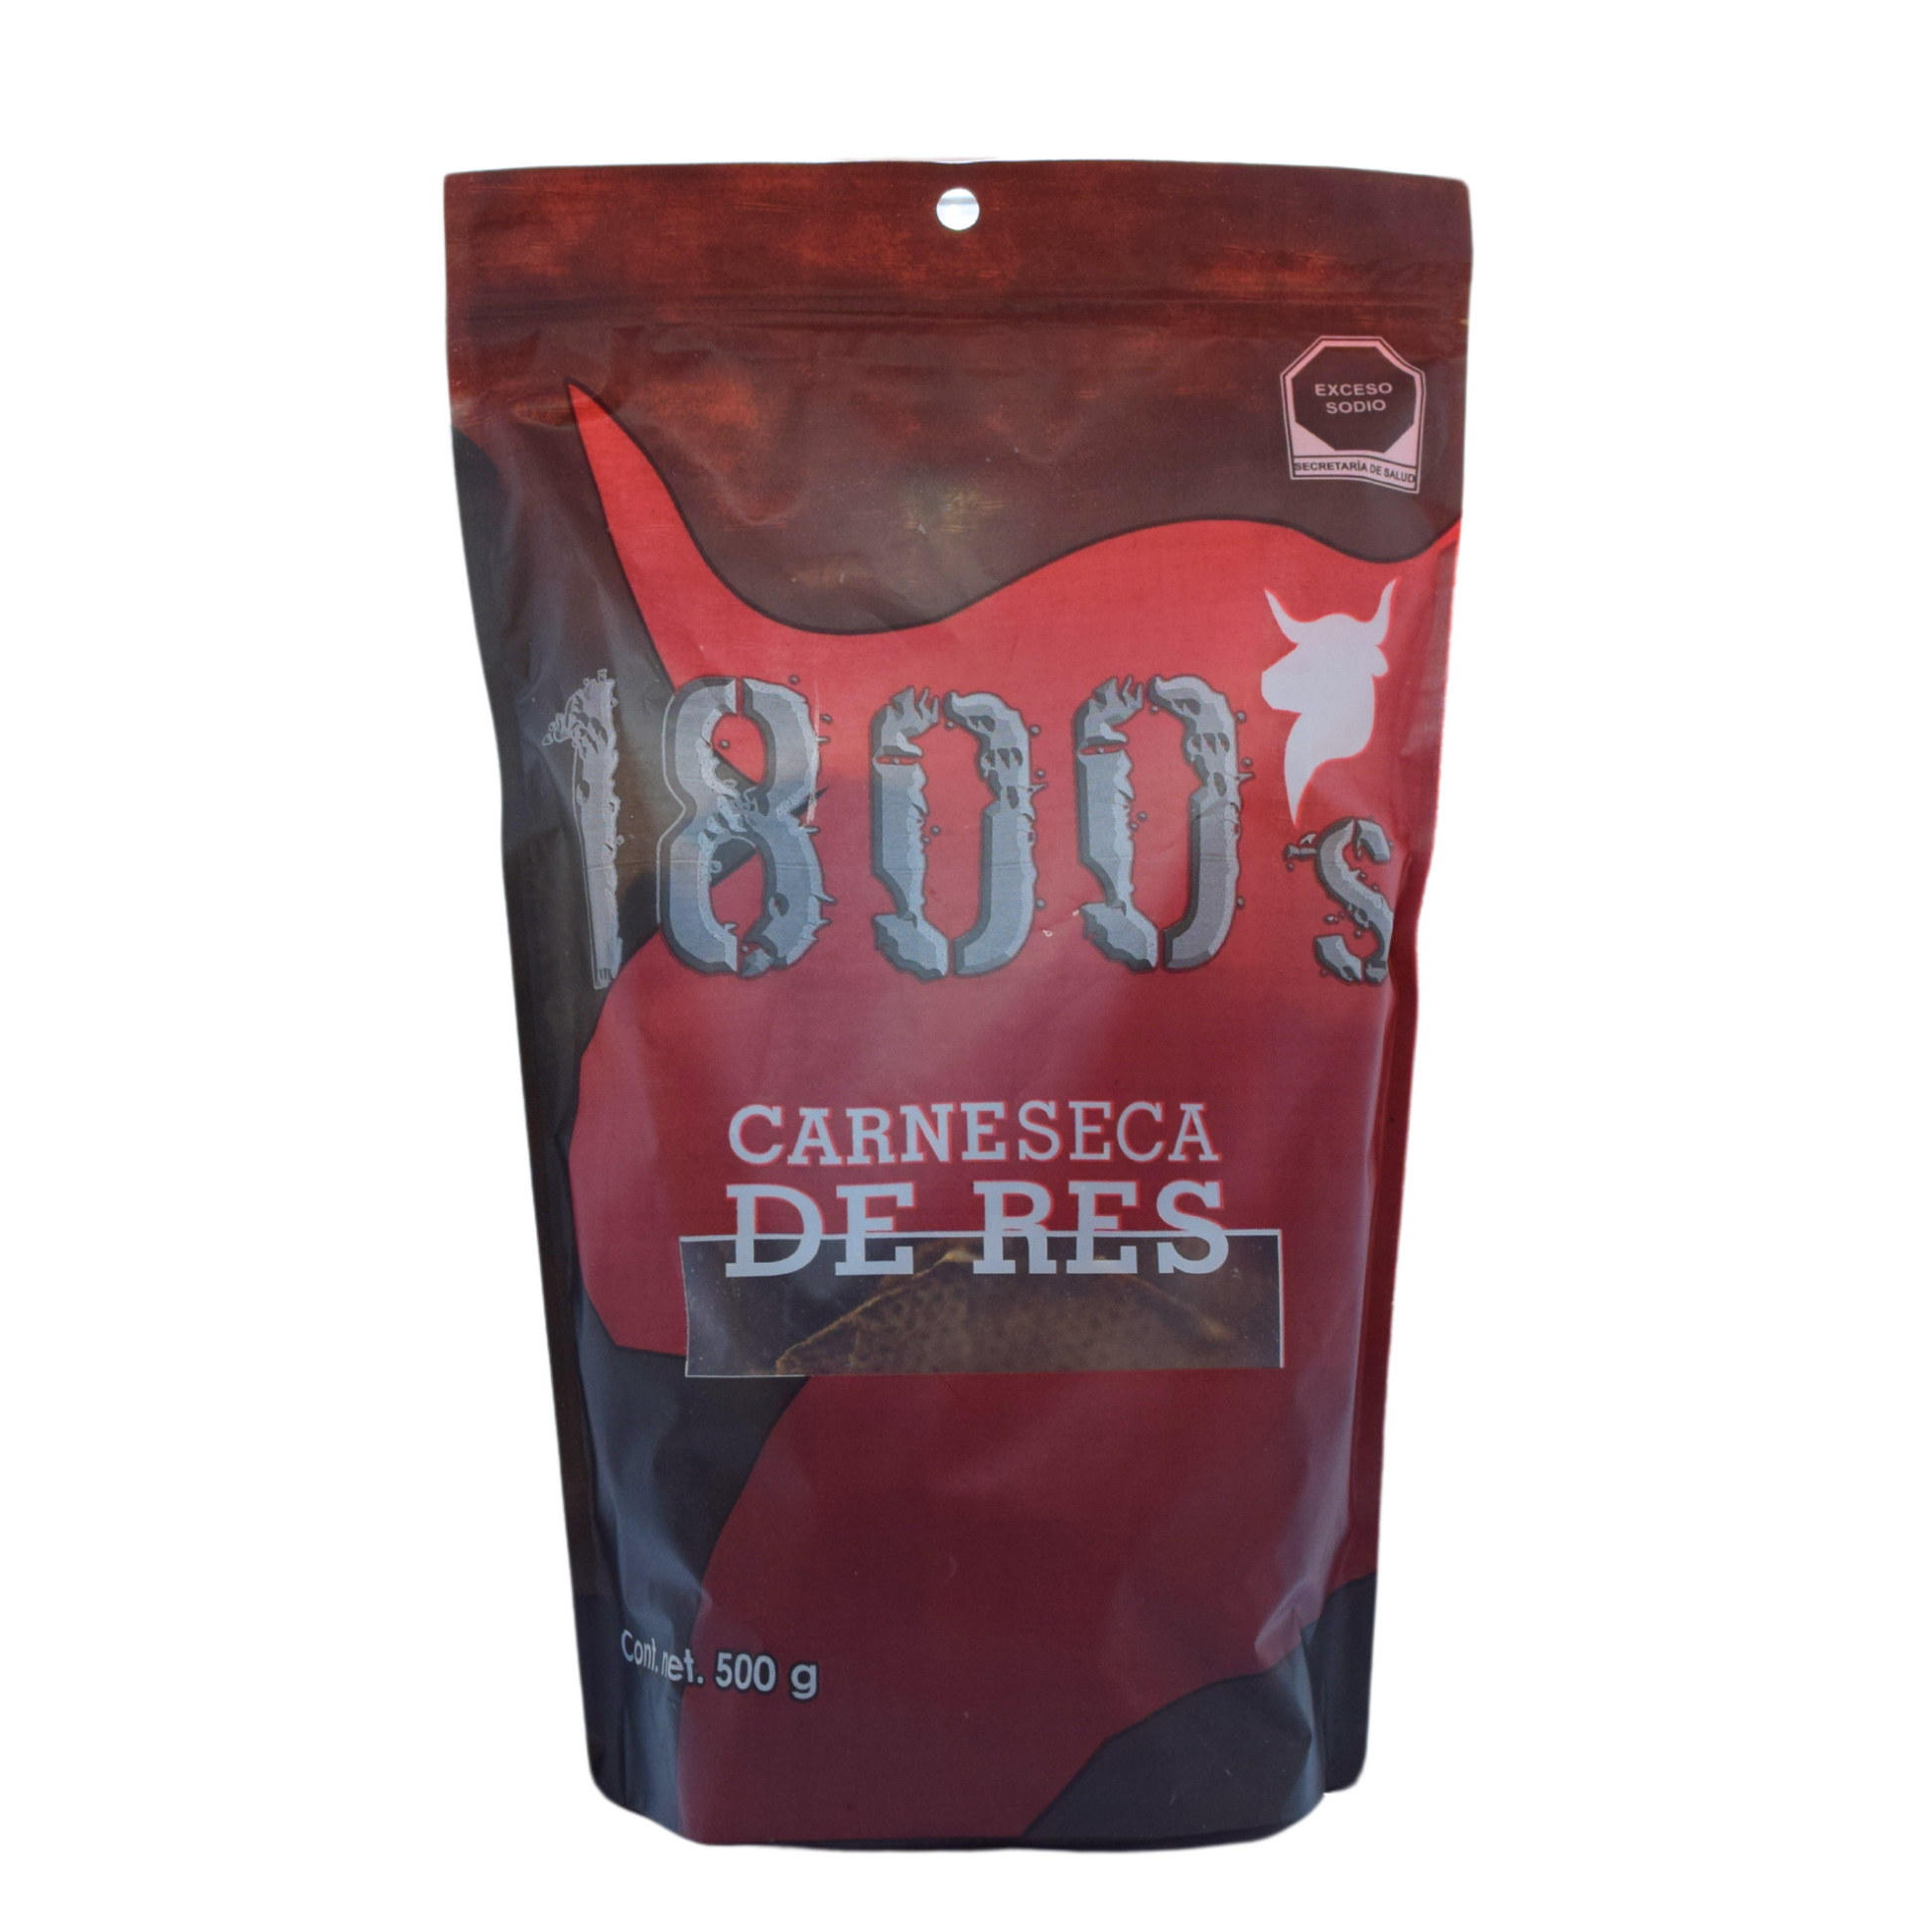 Carne seca 1800 - 500gr